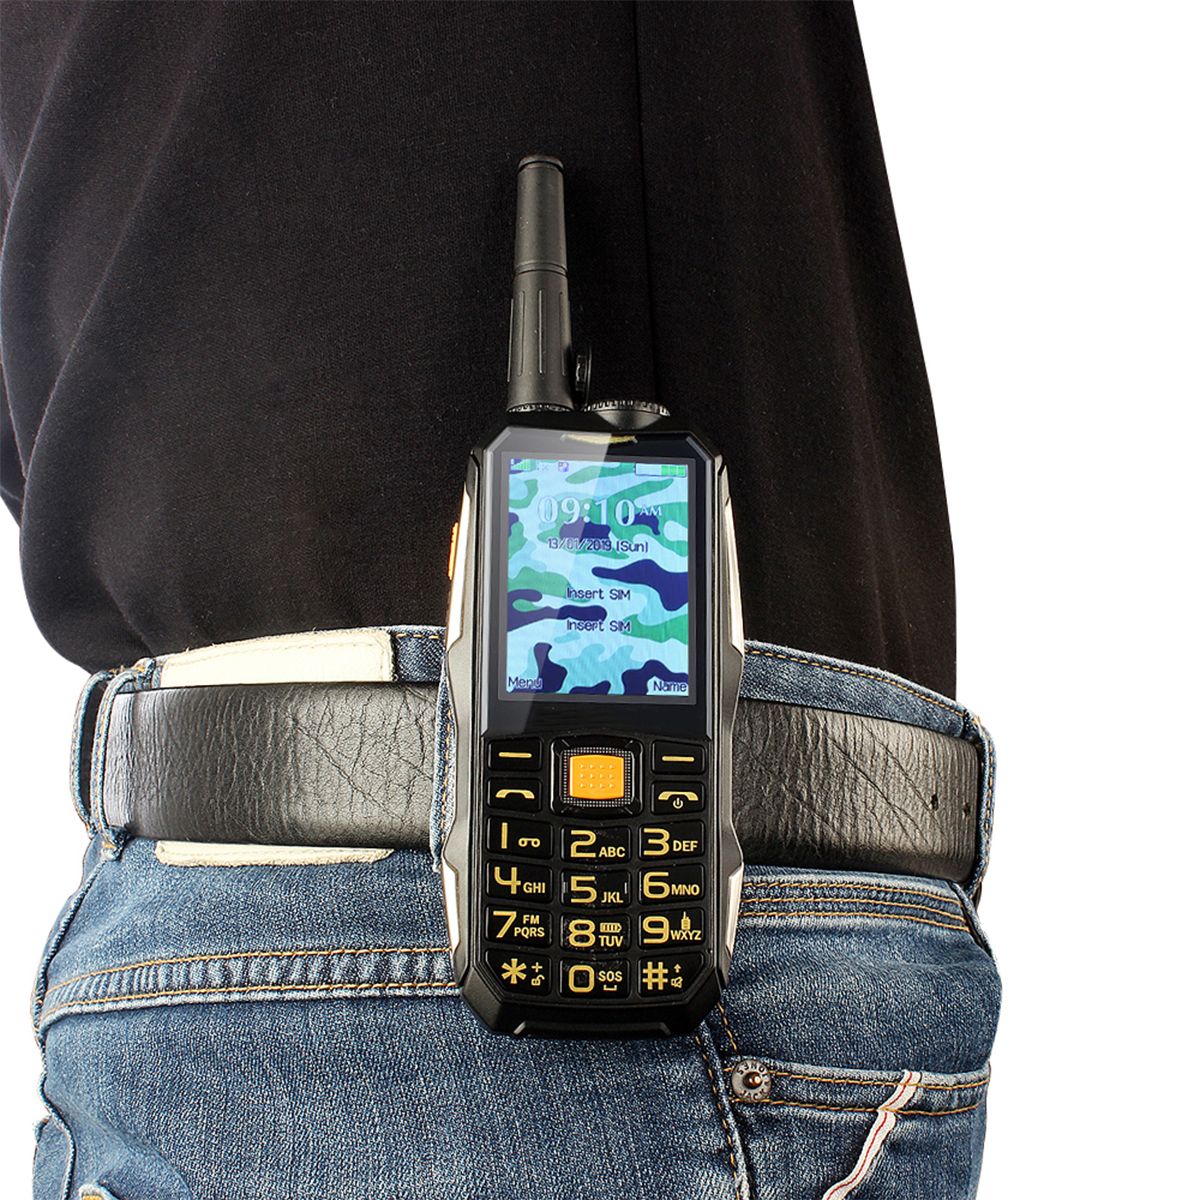 24inch-19800mah-Rugged-Phone-Dual-SIM-GSM-Walkie-Talkie-Standby-for-Smartphone-FM-Radio-1433054